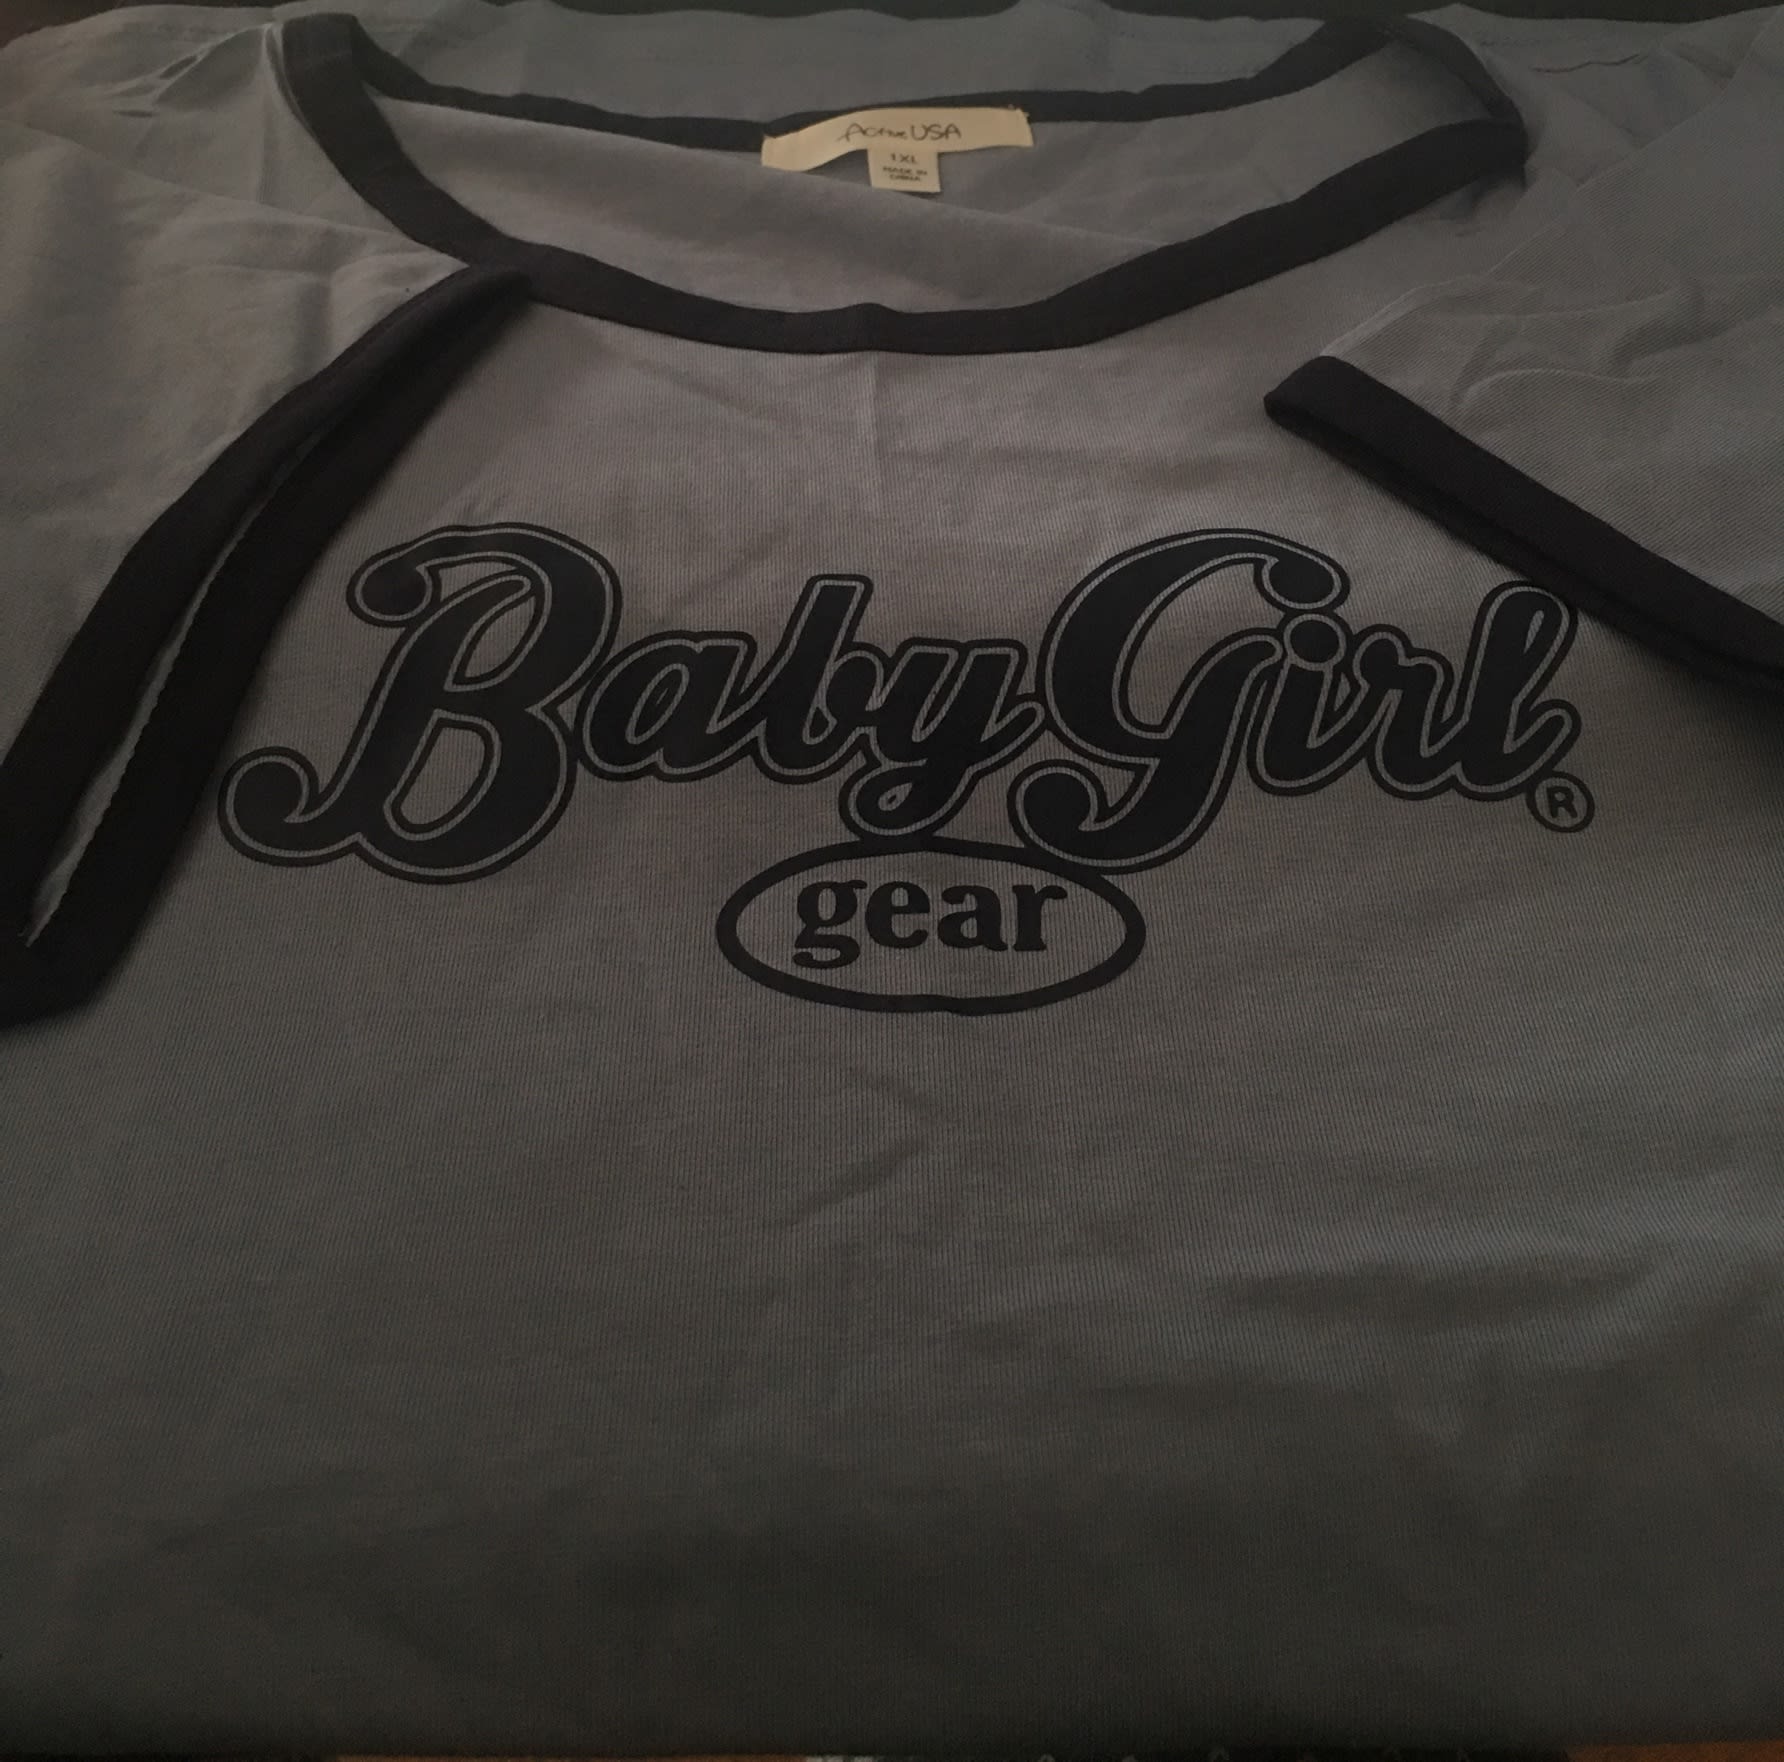 Baby Girl Gear LLC